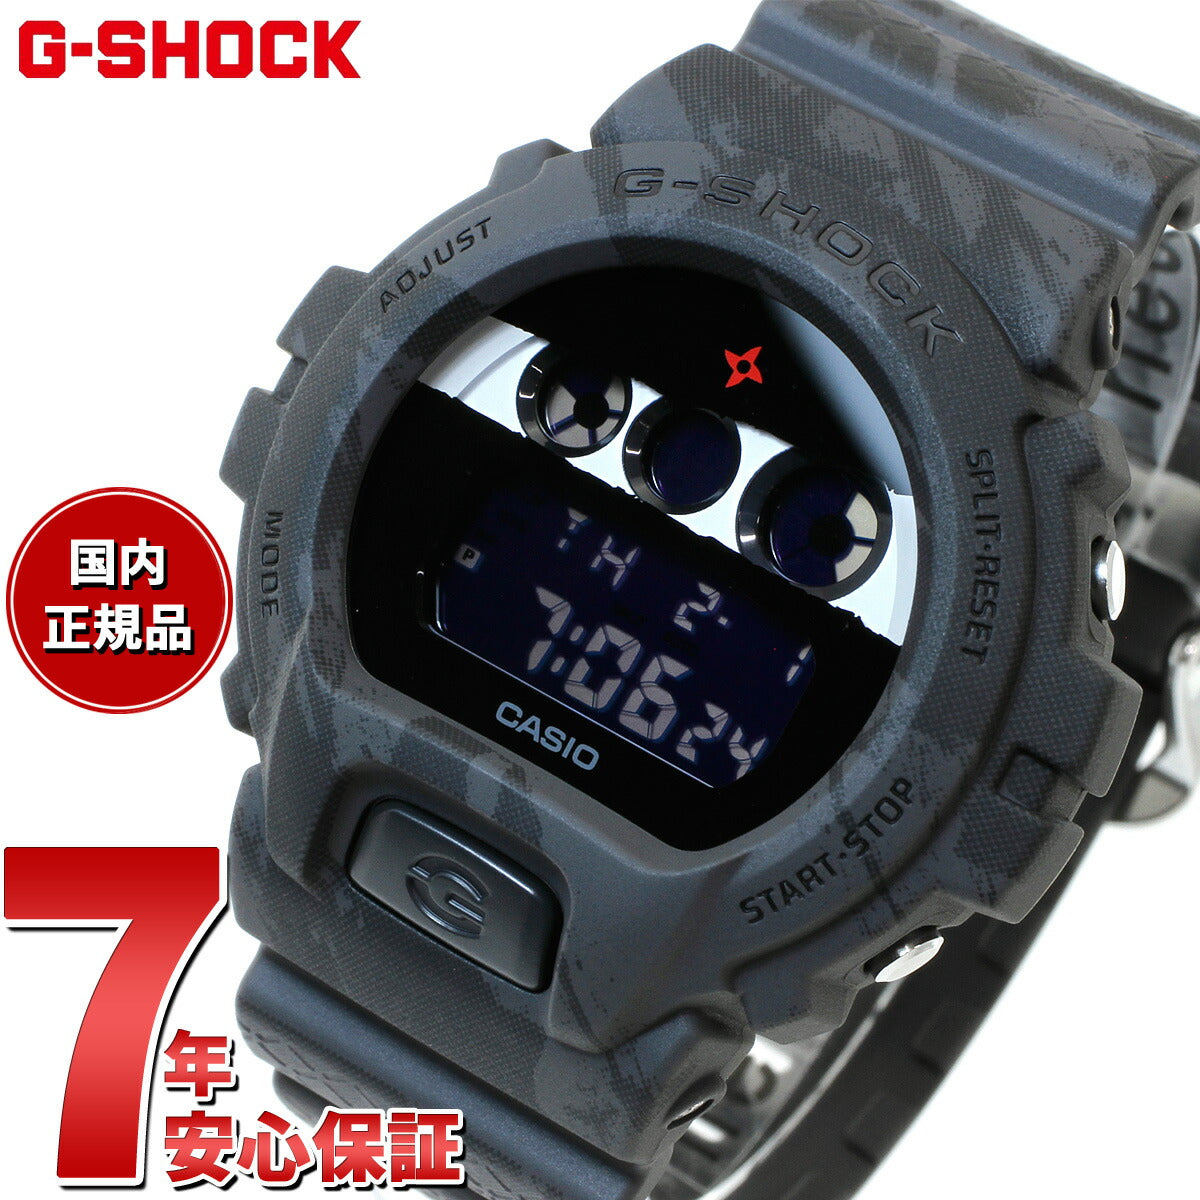 G-SHOCK デジタル メンズ 腕時計 カシオ CASIO 忍者 DW-6900NNJ-1JR 忍者走り イメージ 手裏剣 デザイン